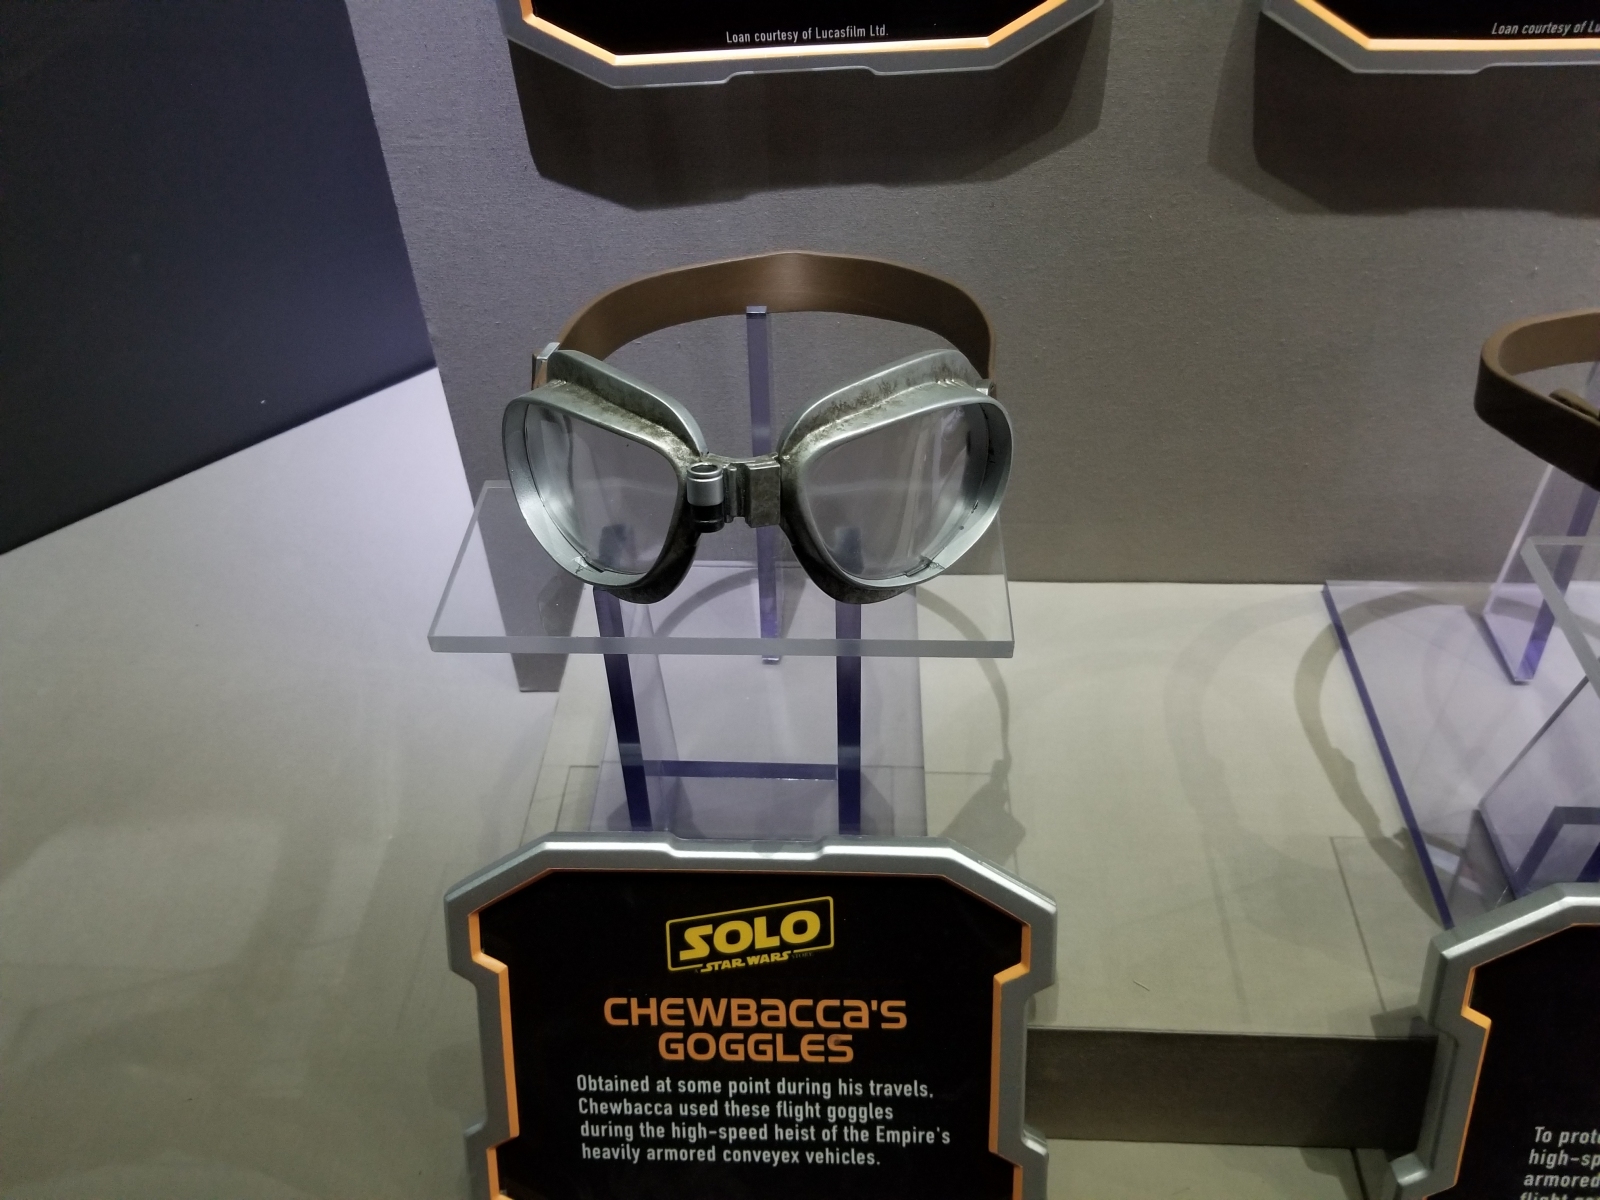 Chewbacca's goggles